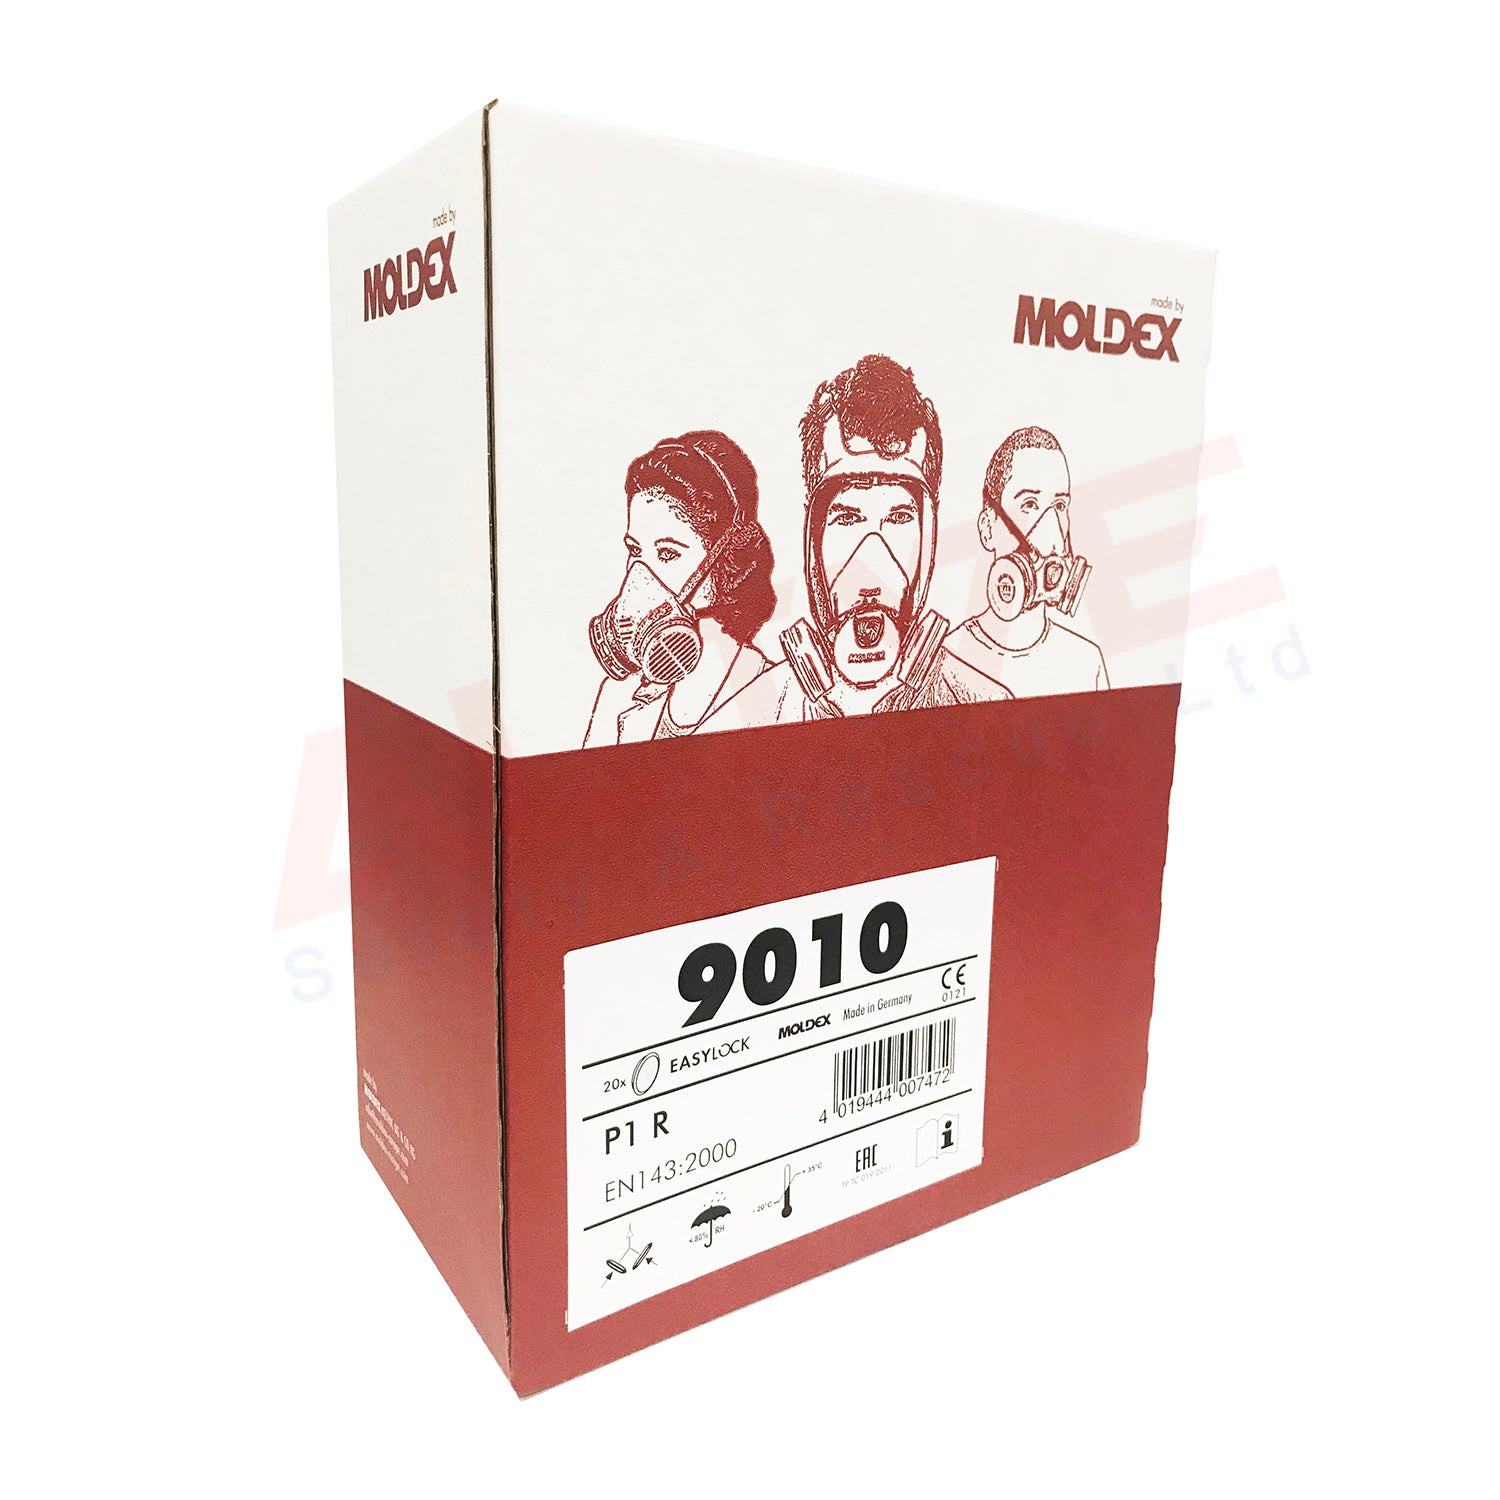 Moldex 9010 - P1 R Particulate Easylock Filter Box